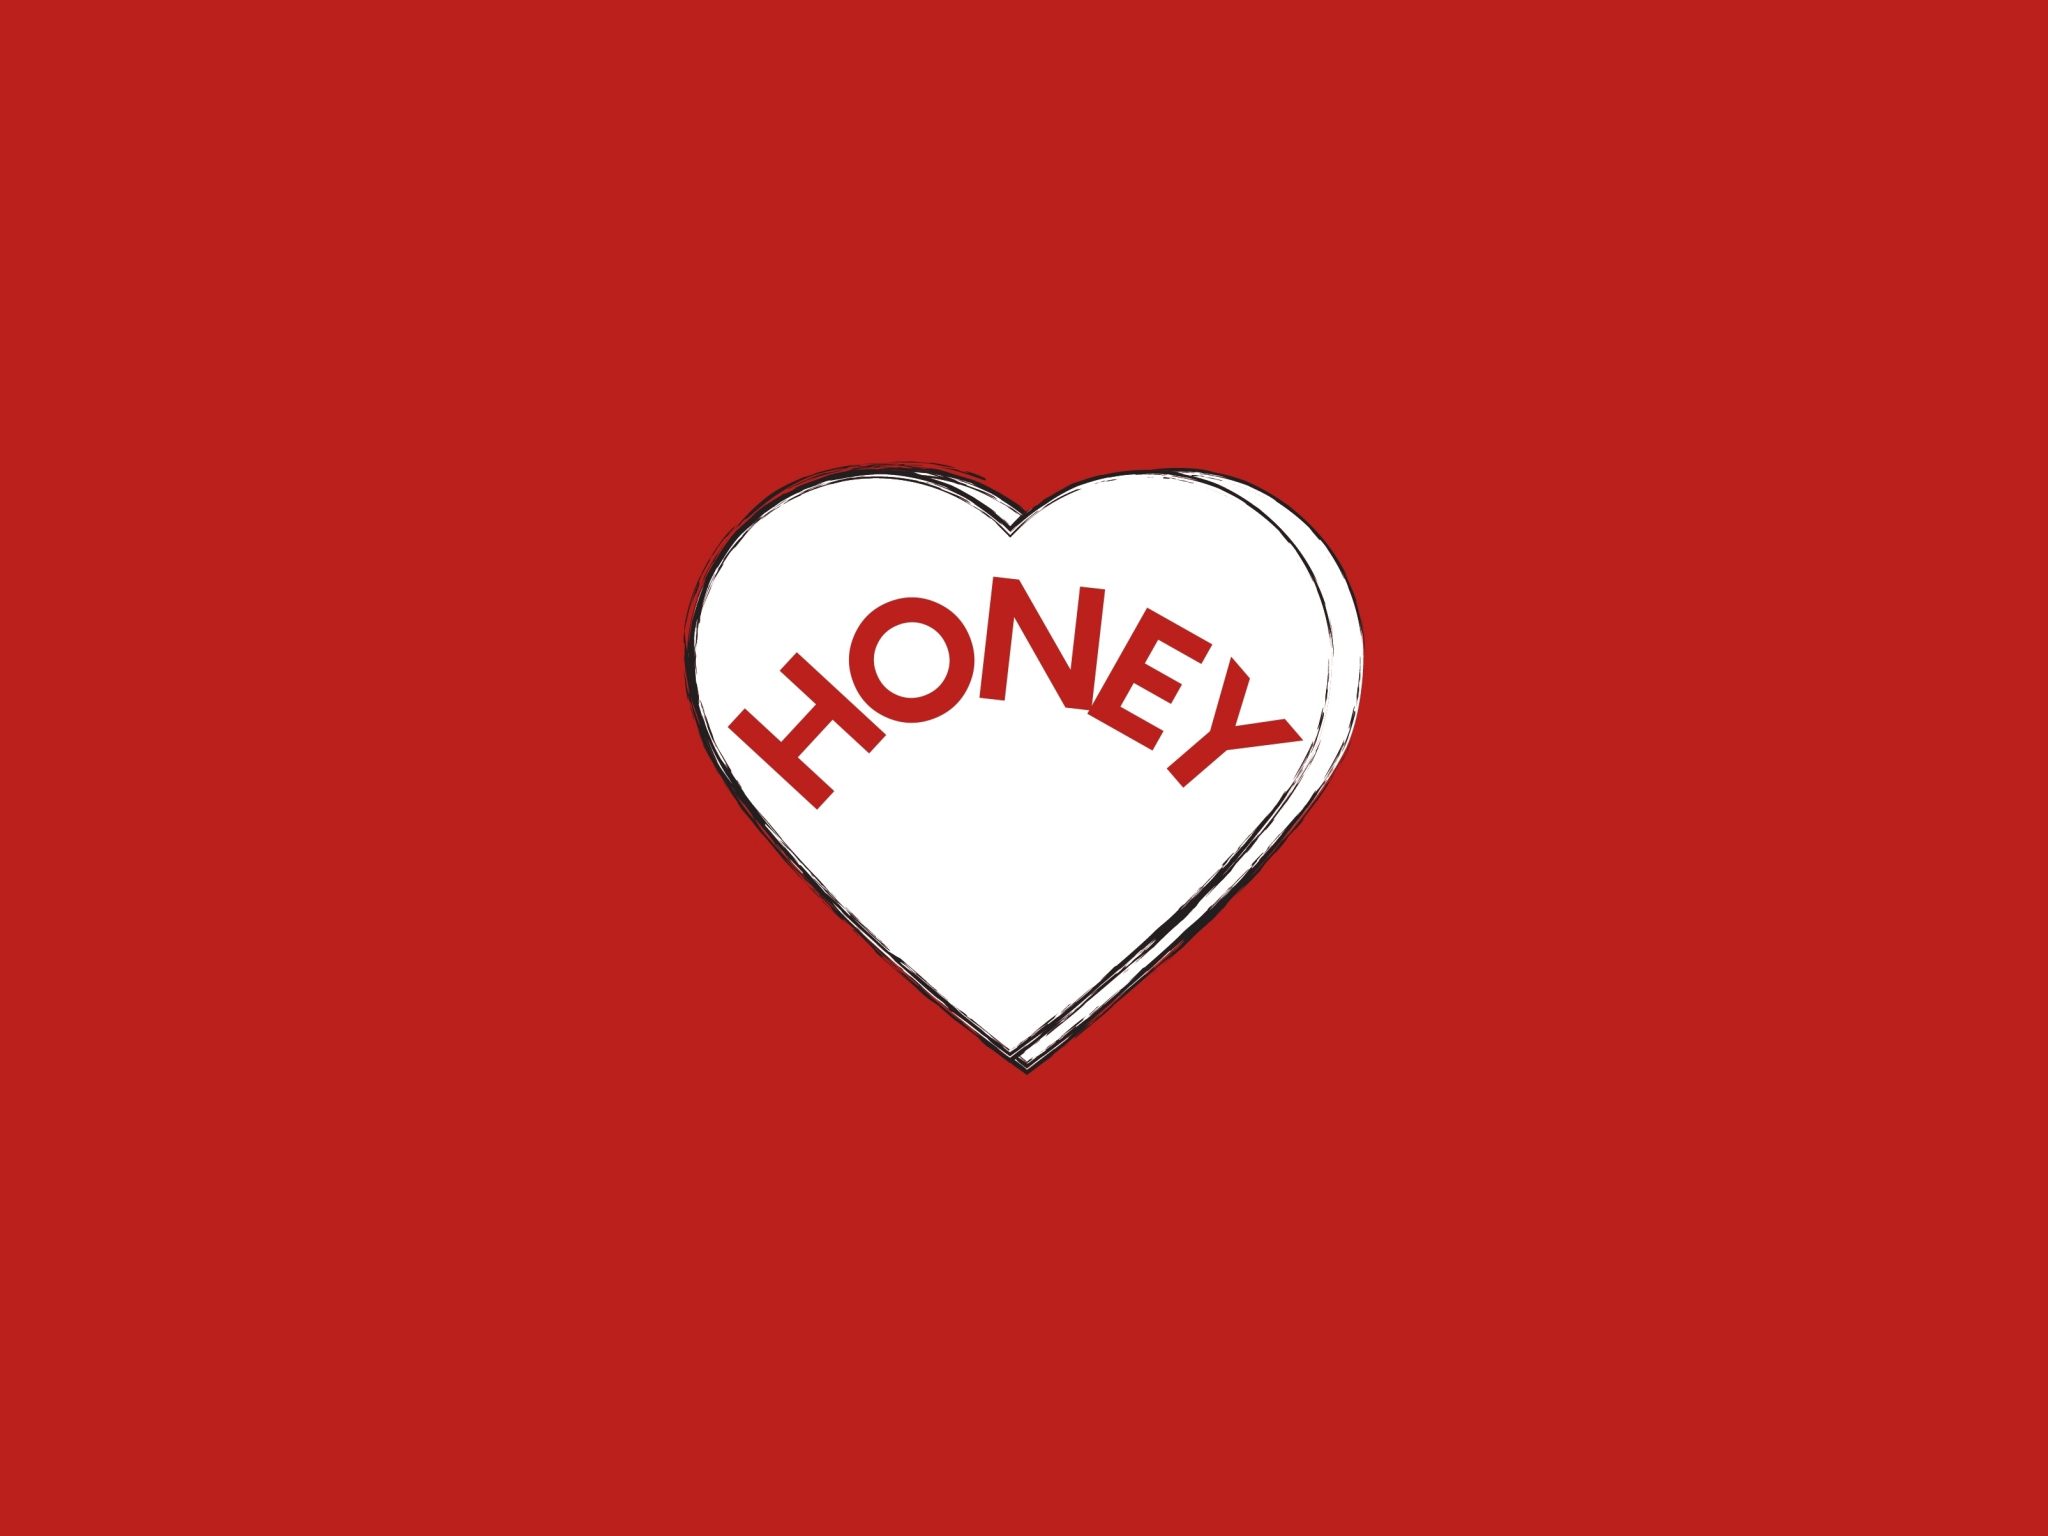 2048x1536 wallpaper Love Heart Honey Valentines Day iPad Wallpaper 2048x1536 pixels resolution